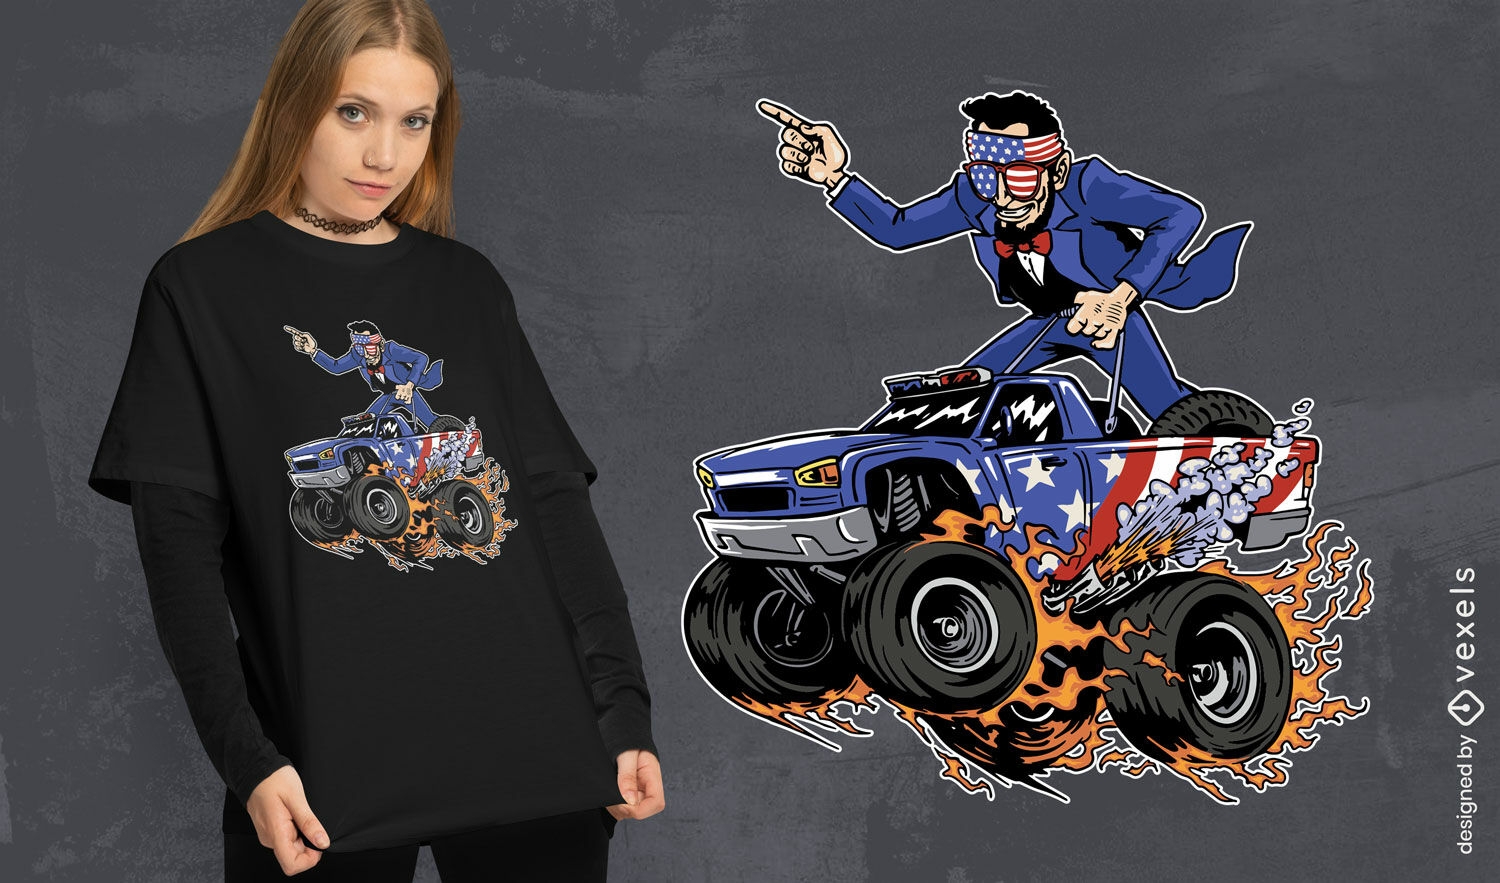 Abraham Liconln on a monster truck t-shirt design